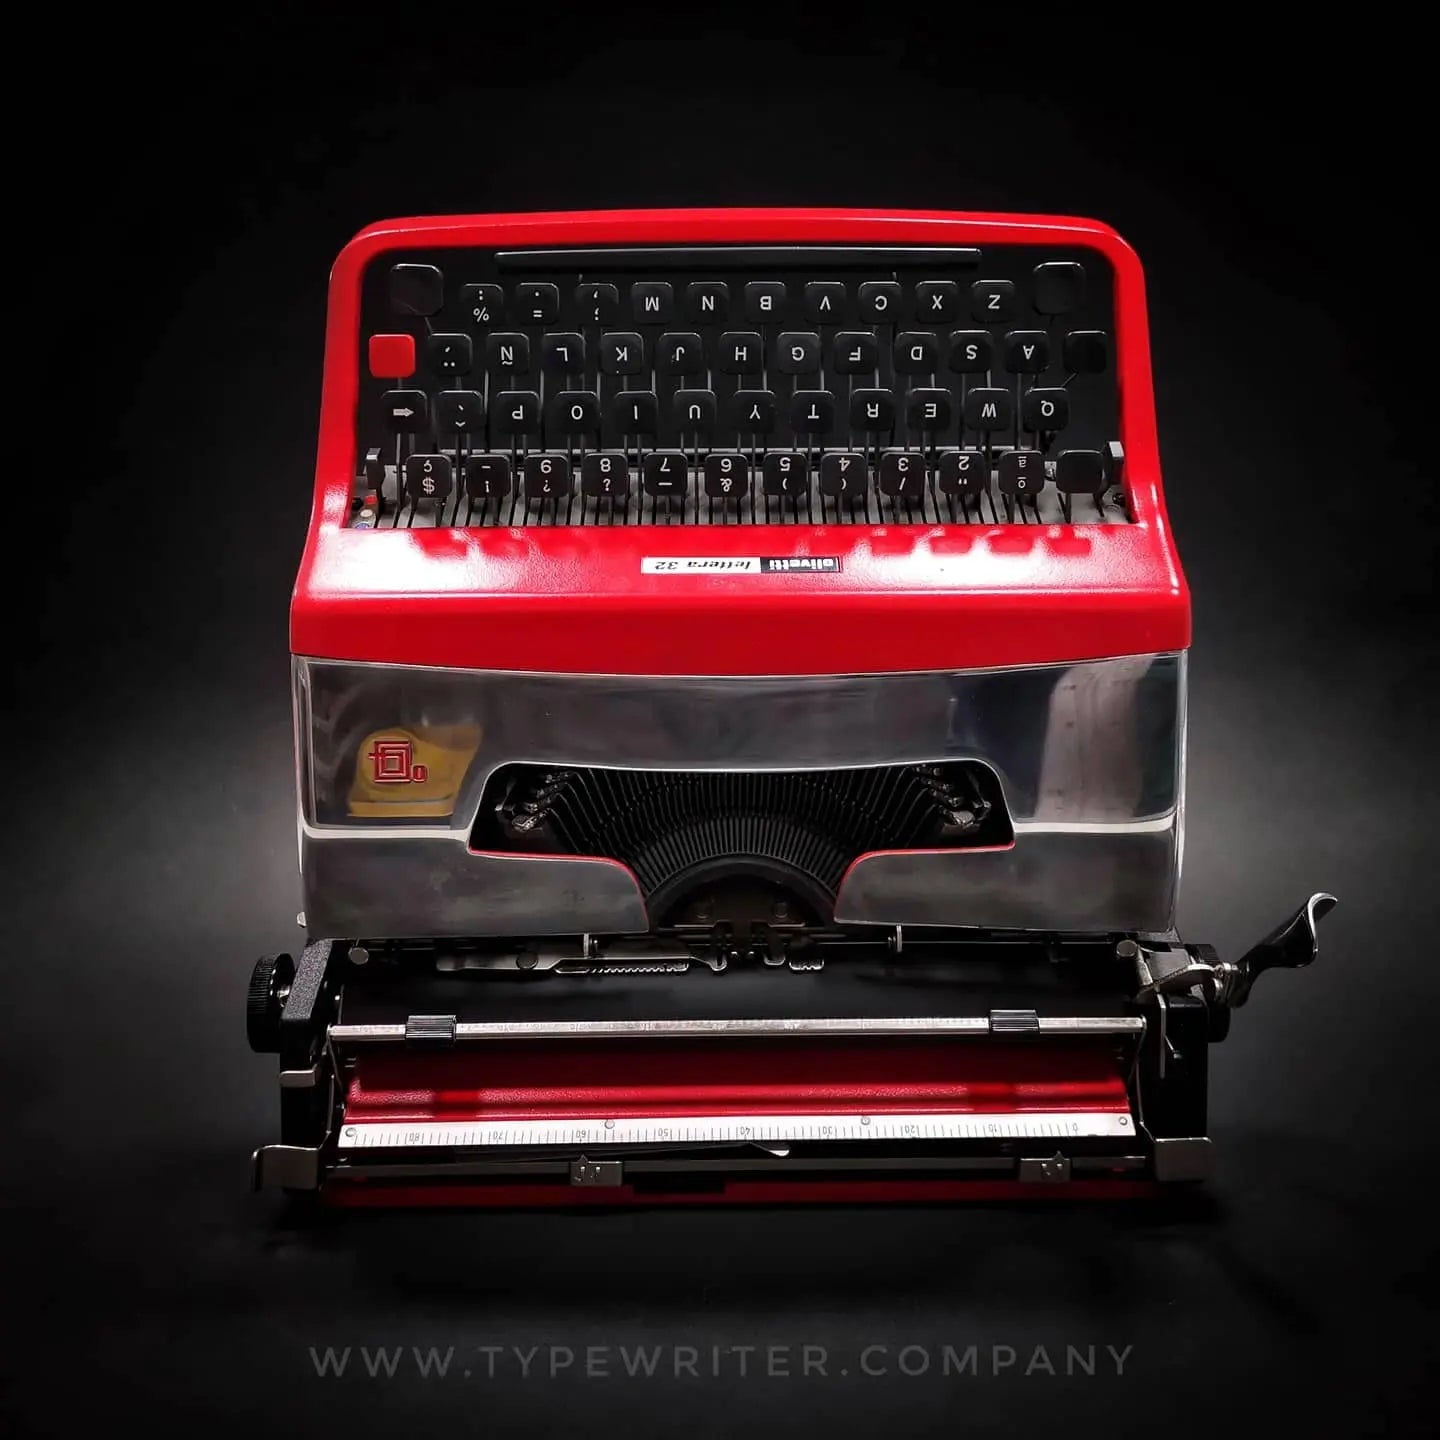 SALE! - Limited Edition Olivetti Lettera 32 Red & Chrome Typewriter, Vintage, Professionally Serviced - ElGranero Typewriter.Company